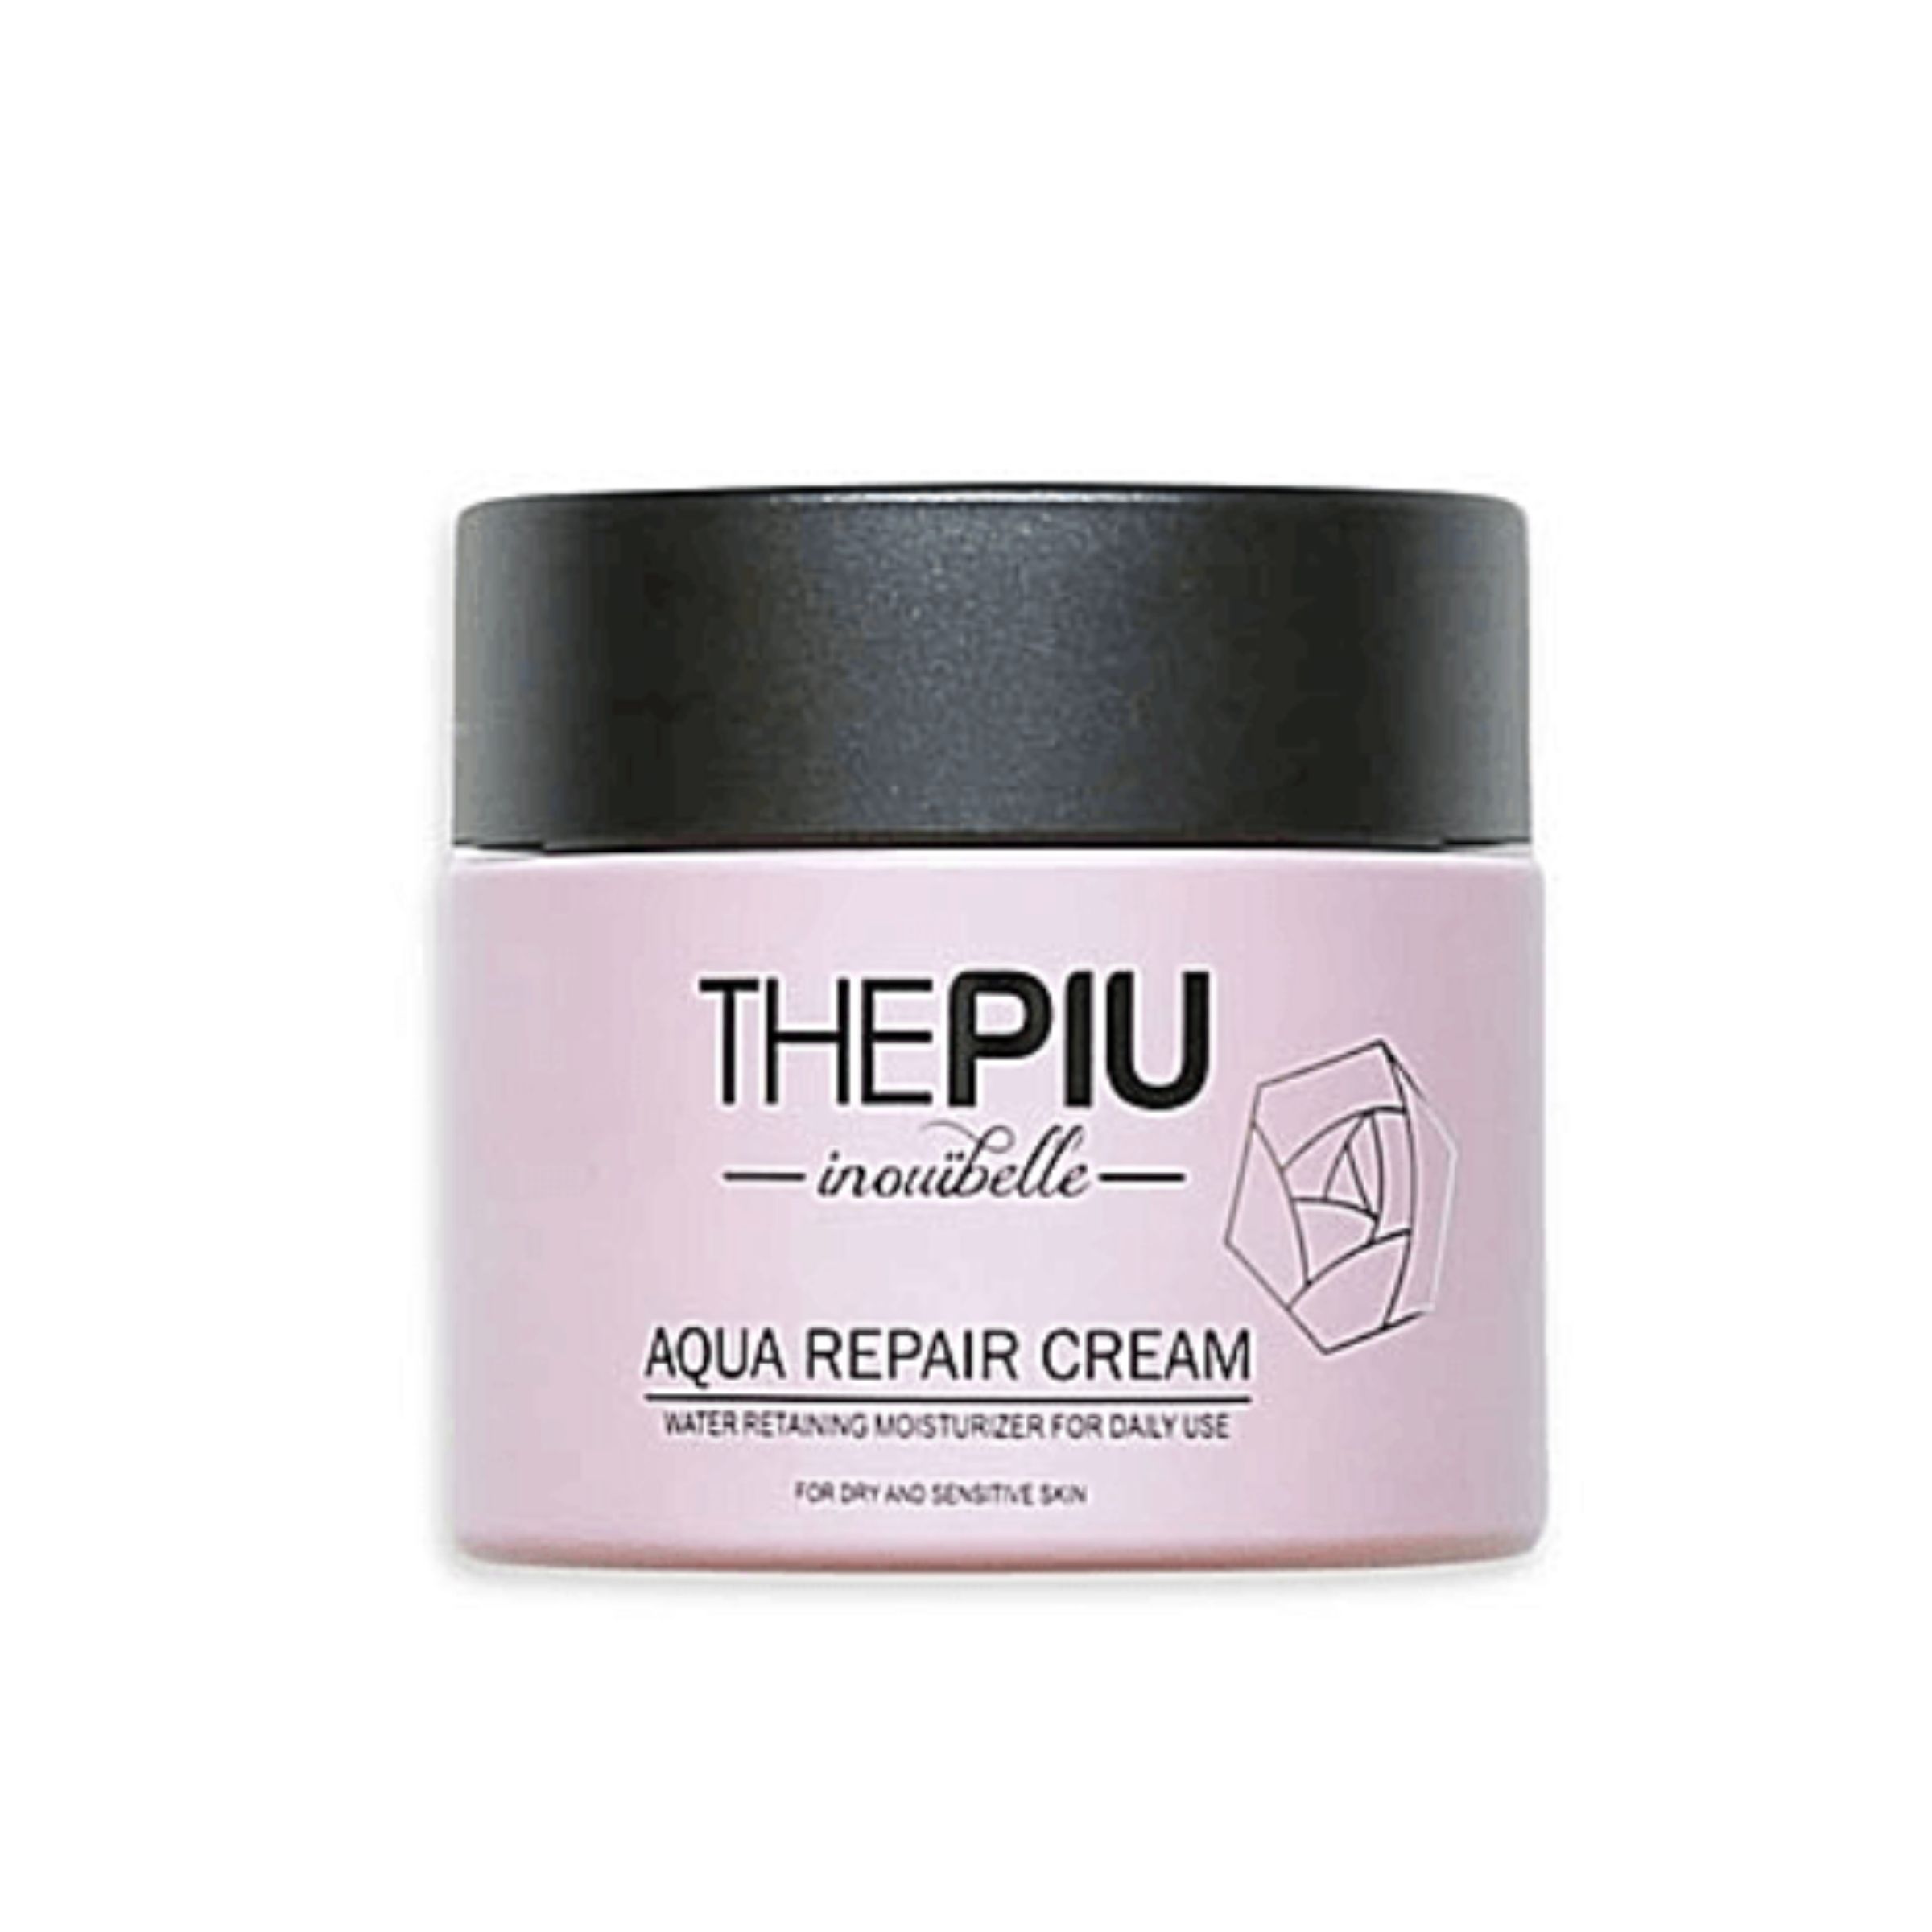 The Piu - Aqua Repair Cream